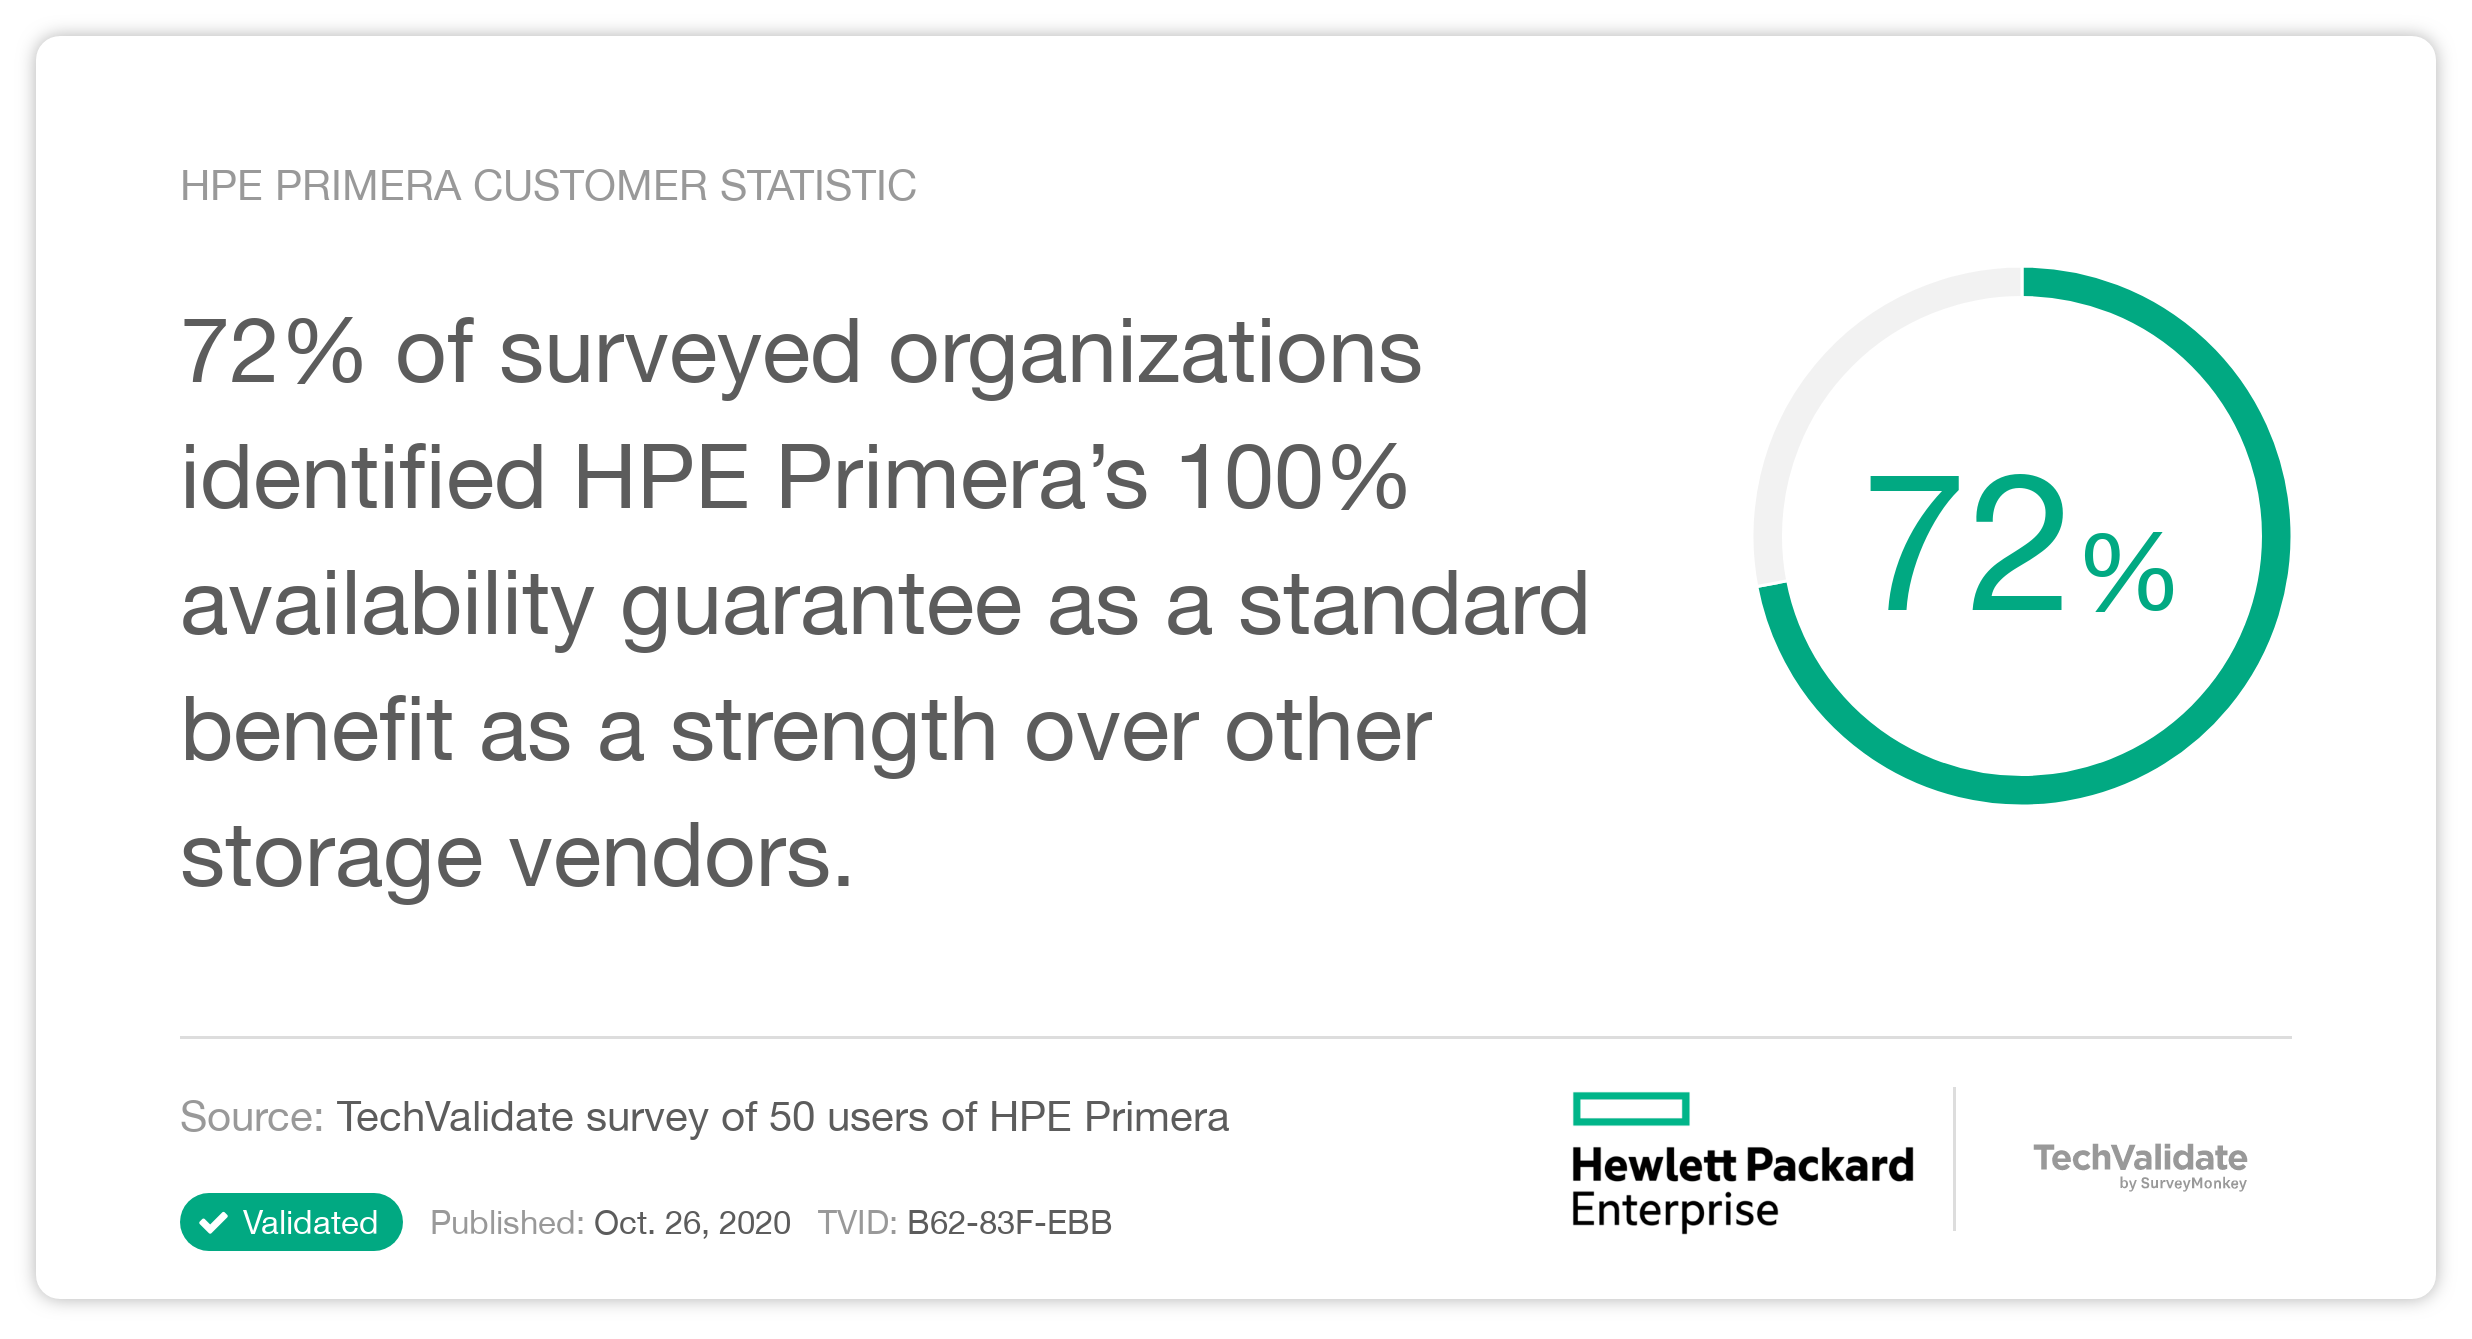 HPE Primera Customer Statistic